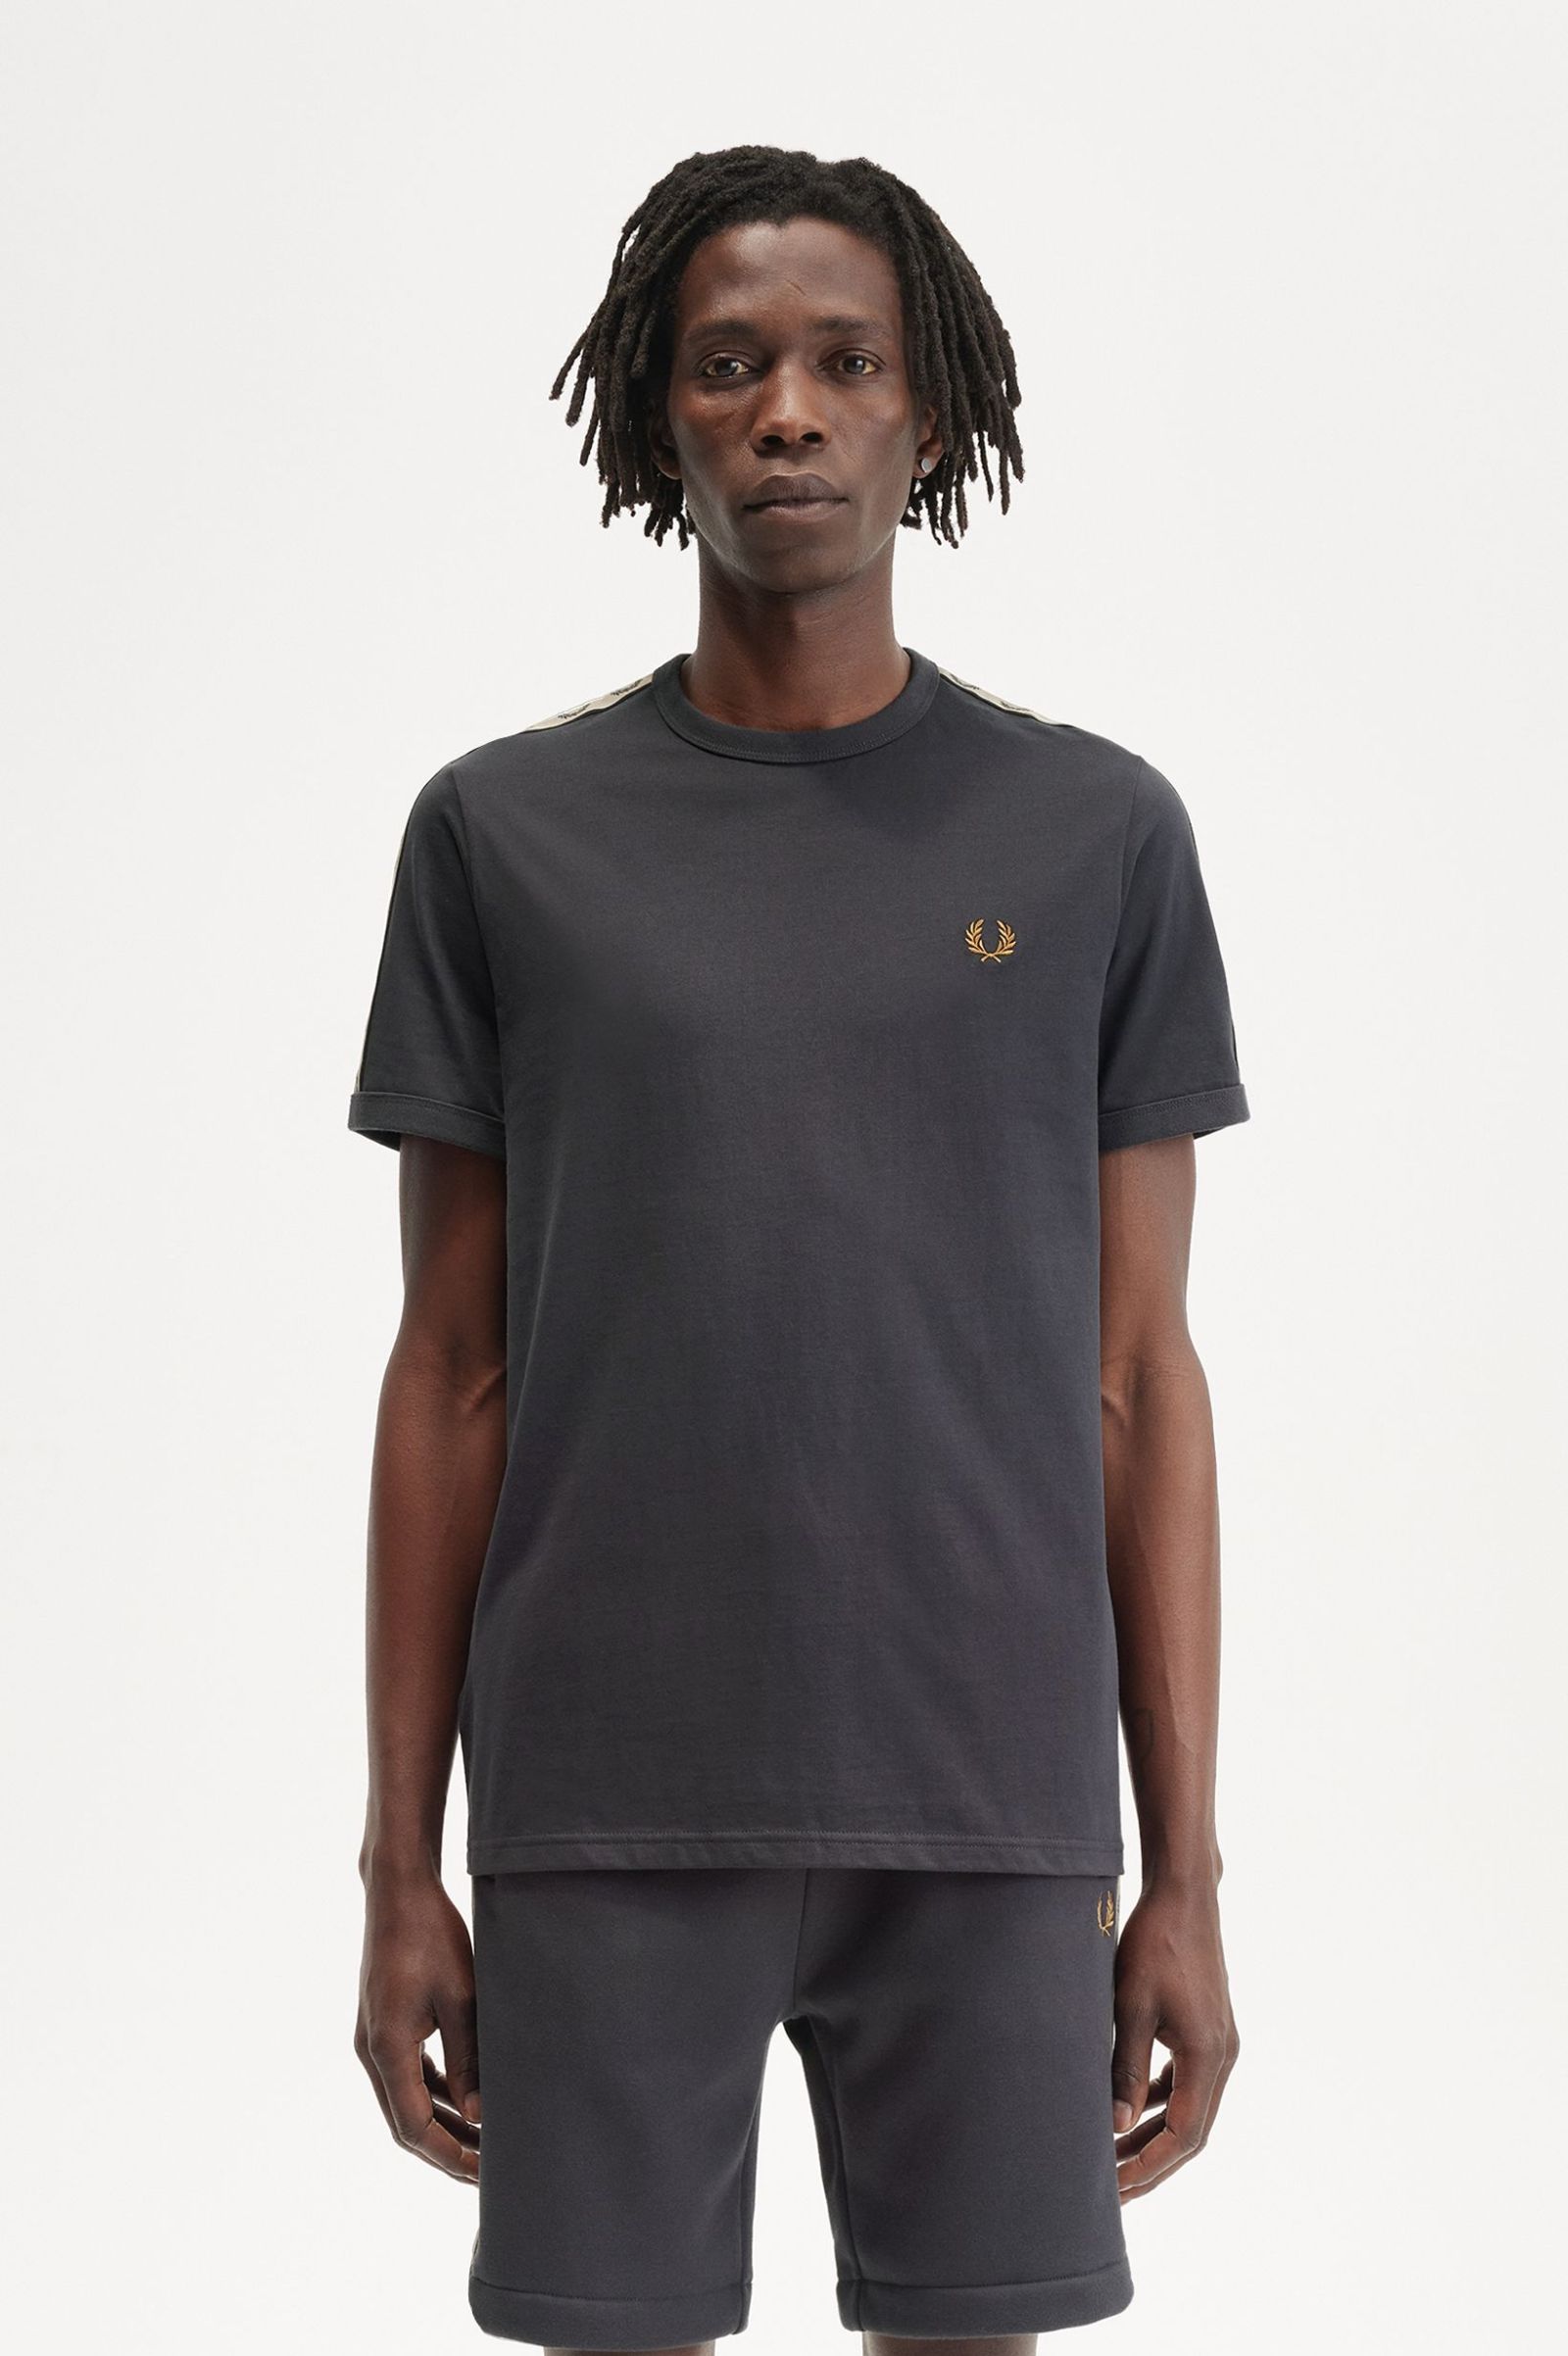 Contrast Tape Ringer T-Shirt - Anchor Grey / Black | Men's T-Shirts ...